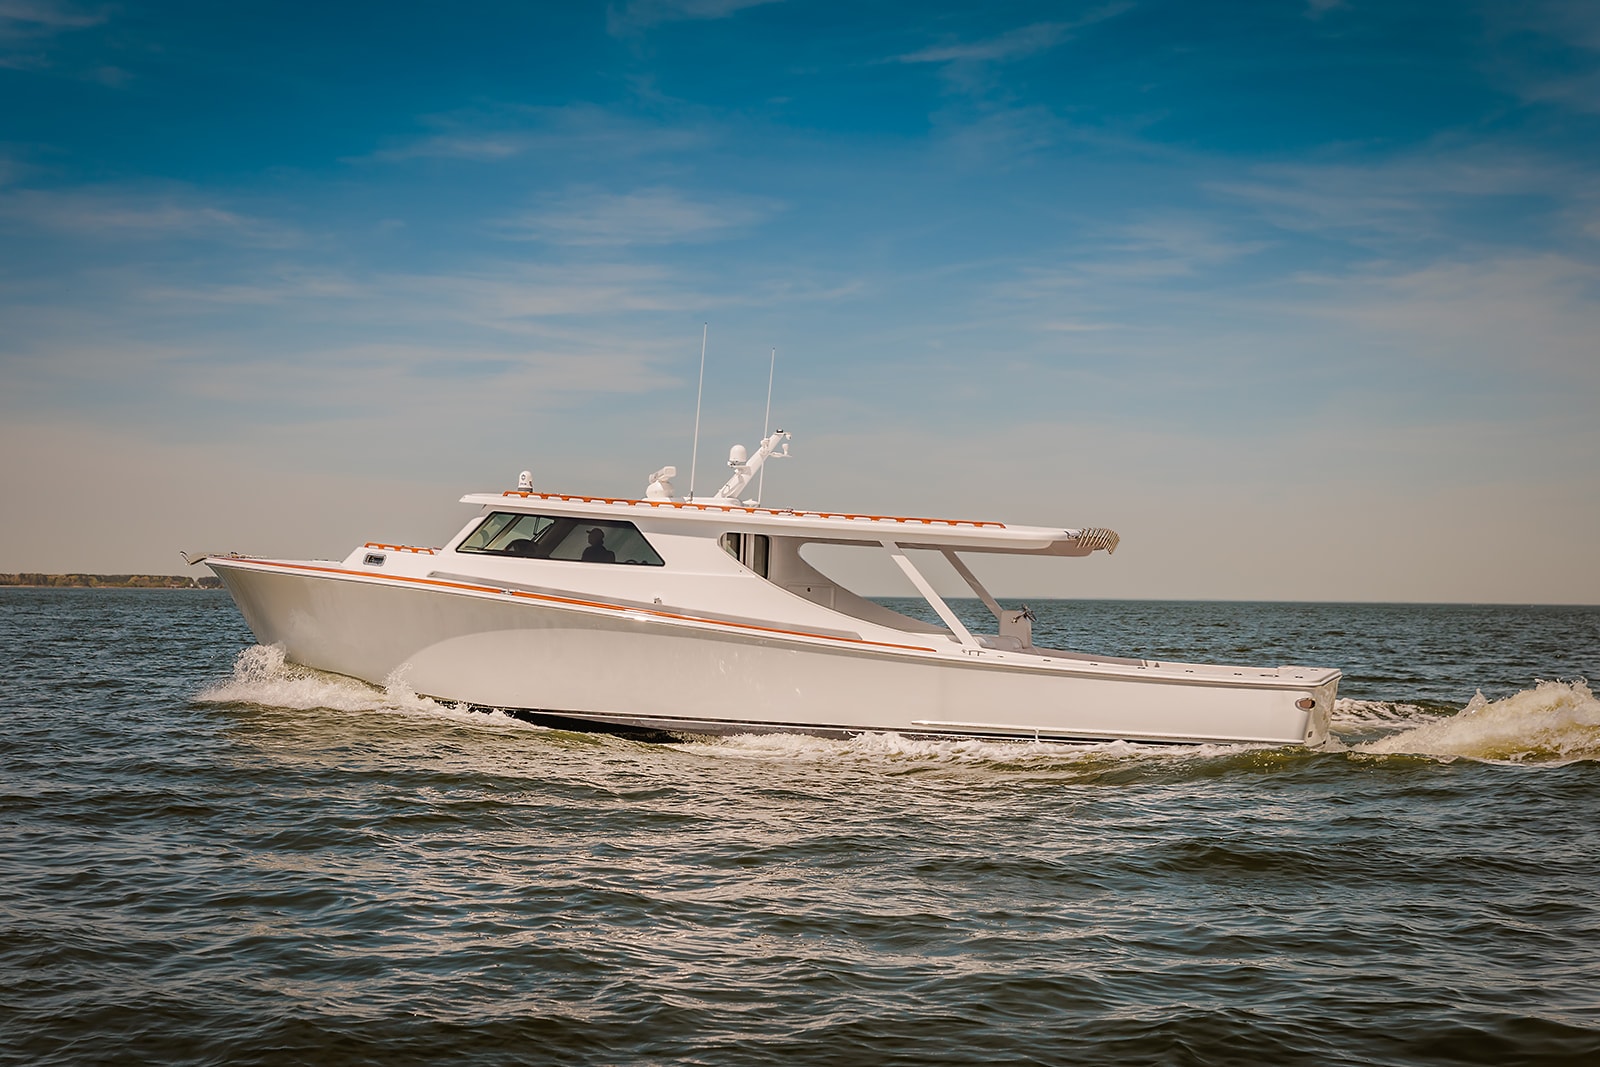 https://s1.cdn.autoevolution.com/images/news/composite-yacht-s-new-cy55-is-an-easily-customizable-sportfishing-boat-196137_1.jpg